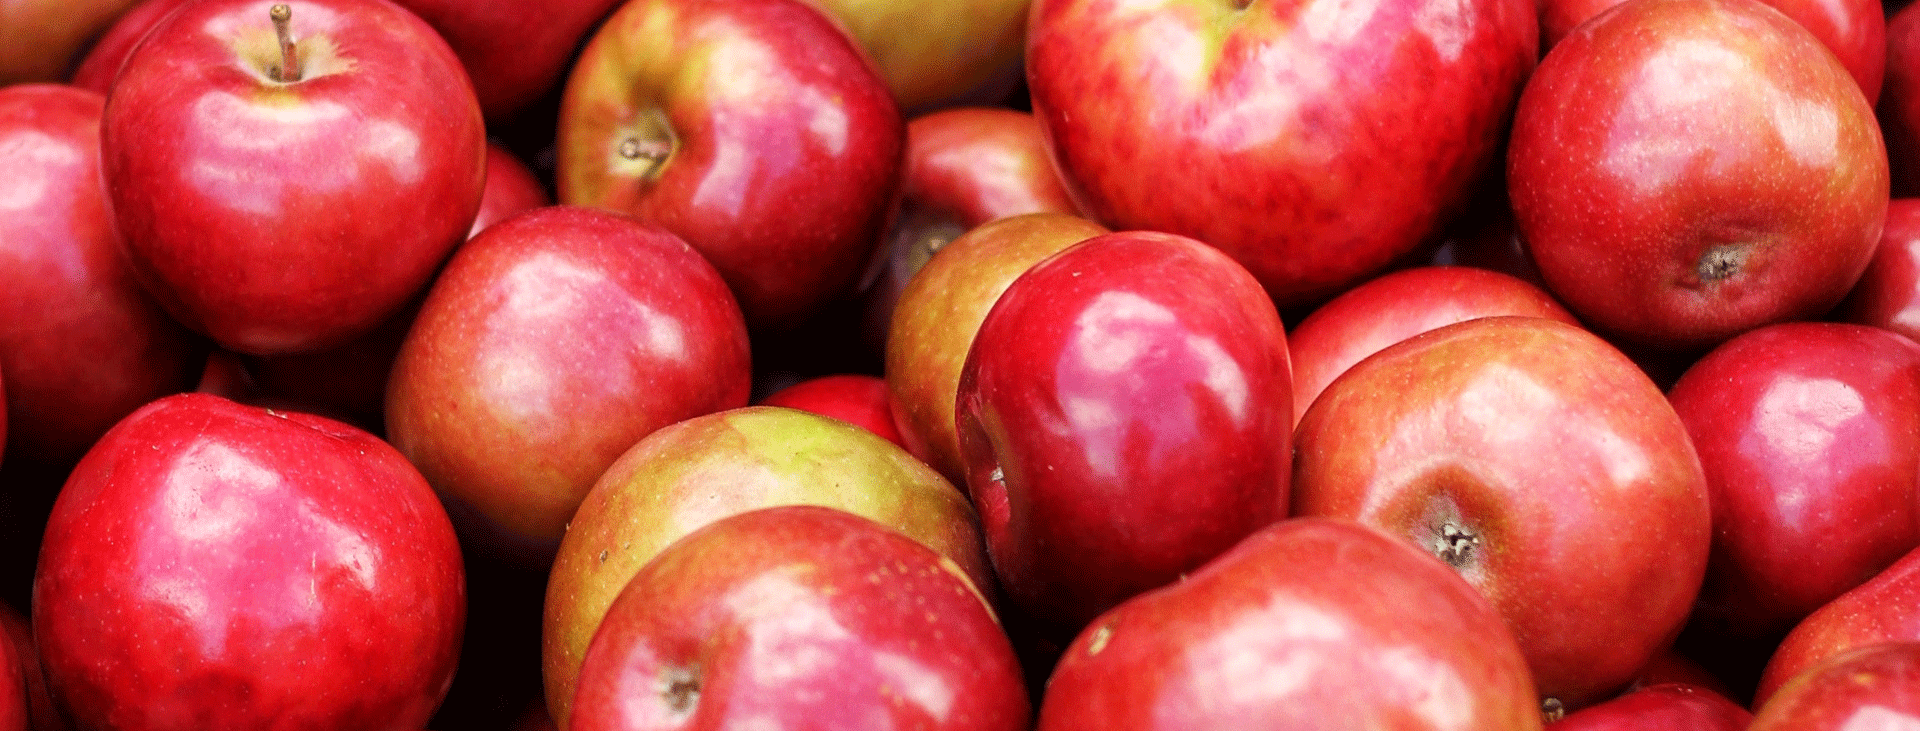 A pile of macintosh apples